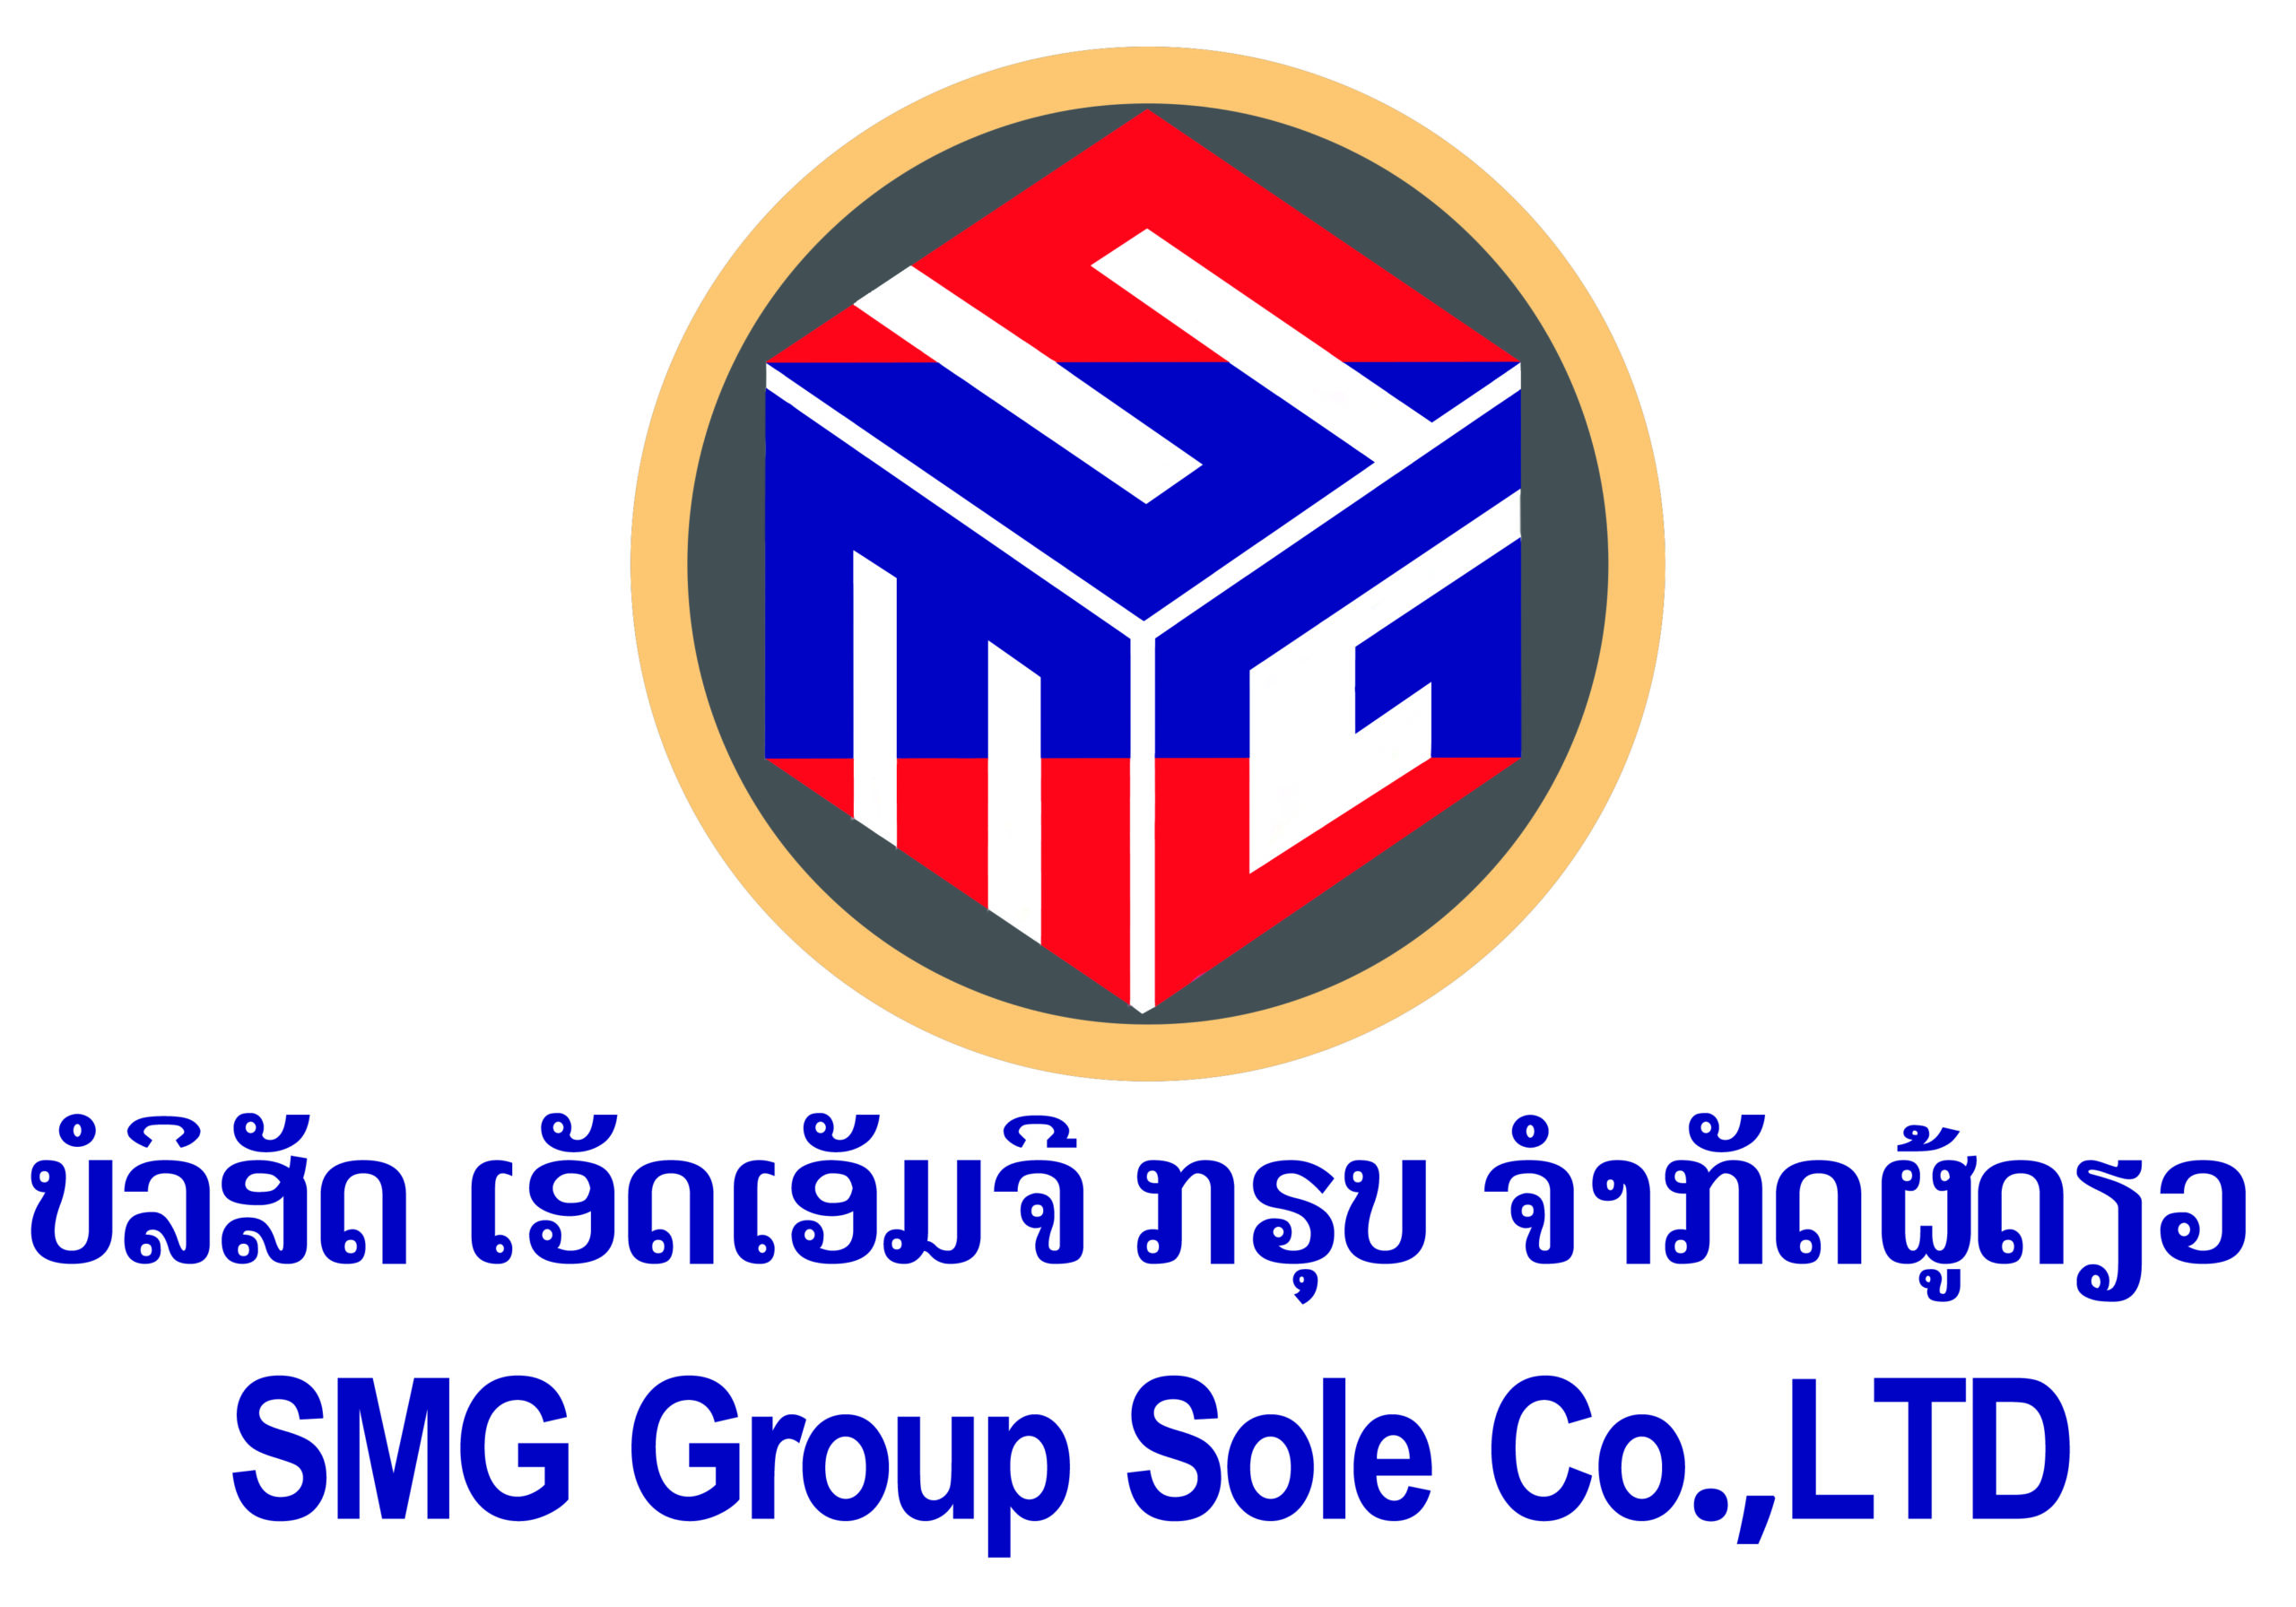 SMG Group Sole Co., Ltd.